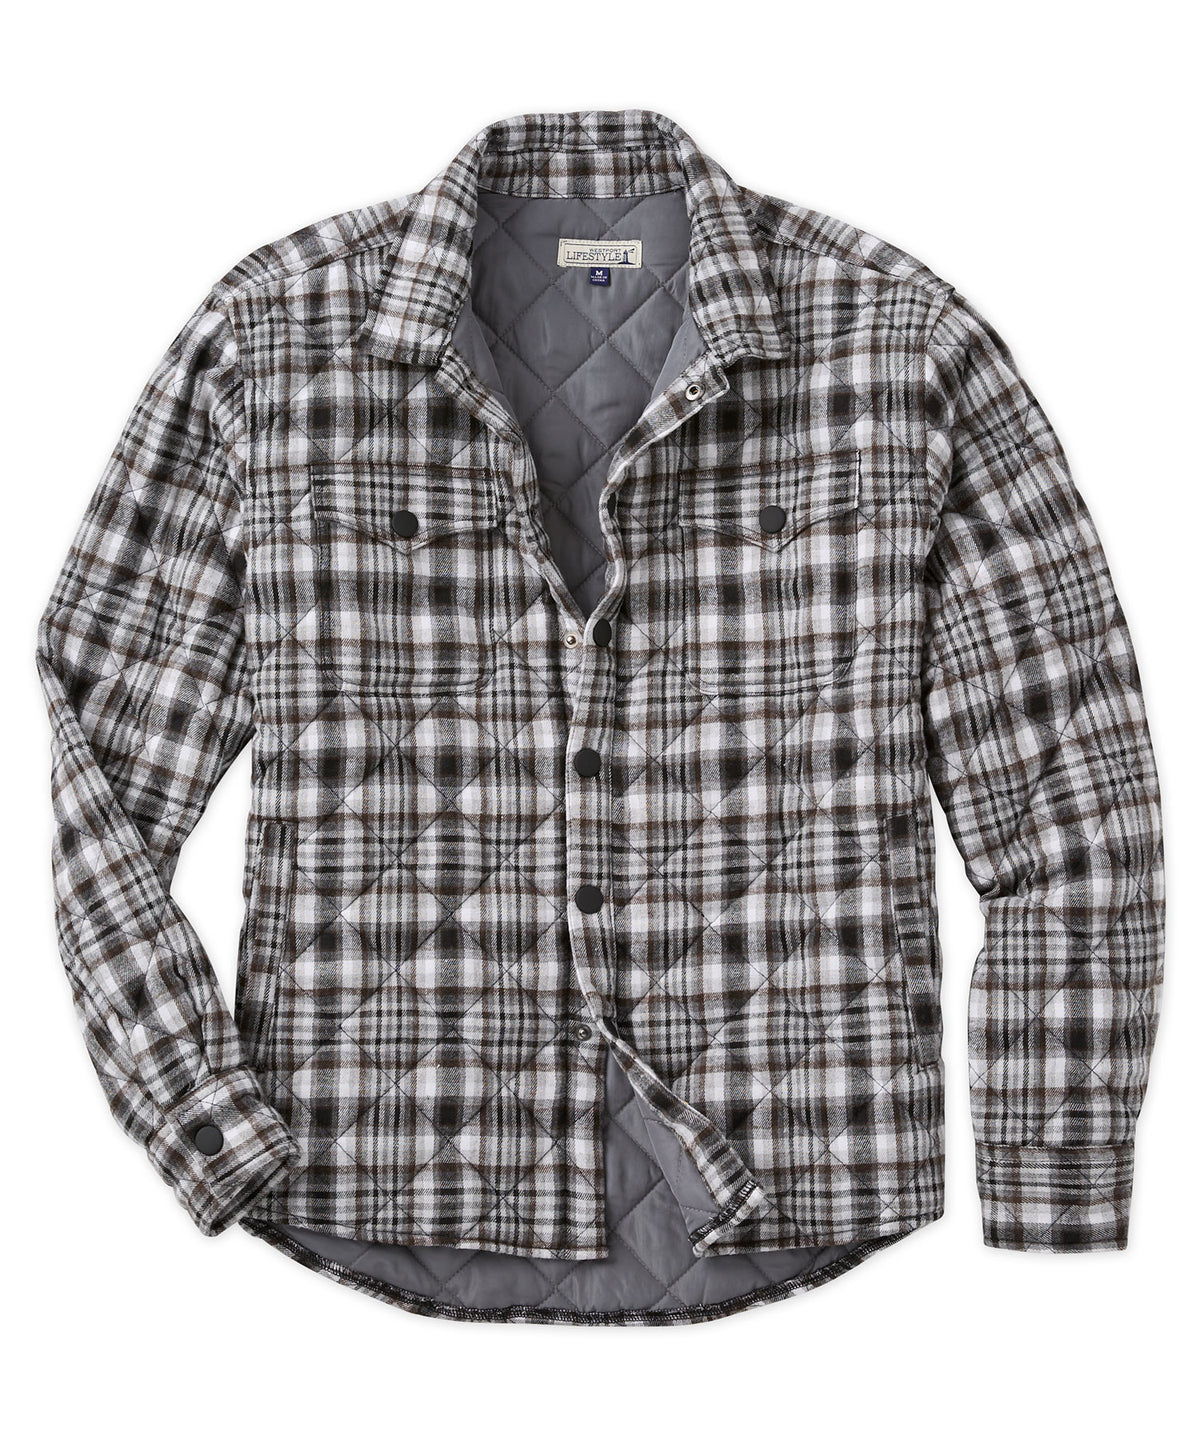 Westport Lifestyle Firepit Plaid Flannel Shirt Jacket, Big & Tall